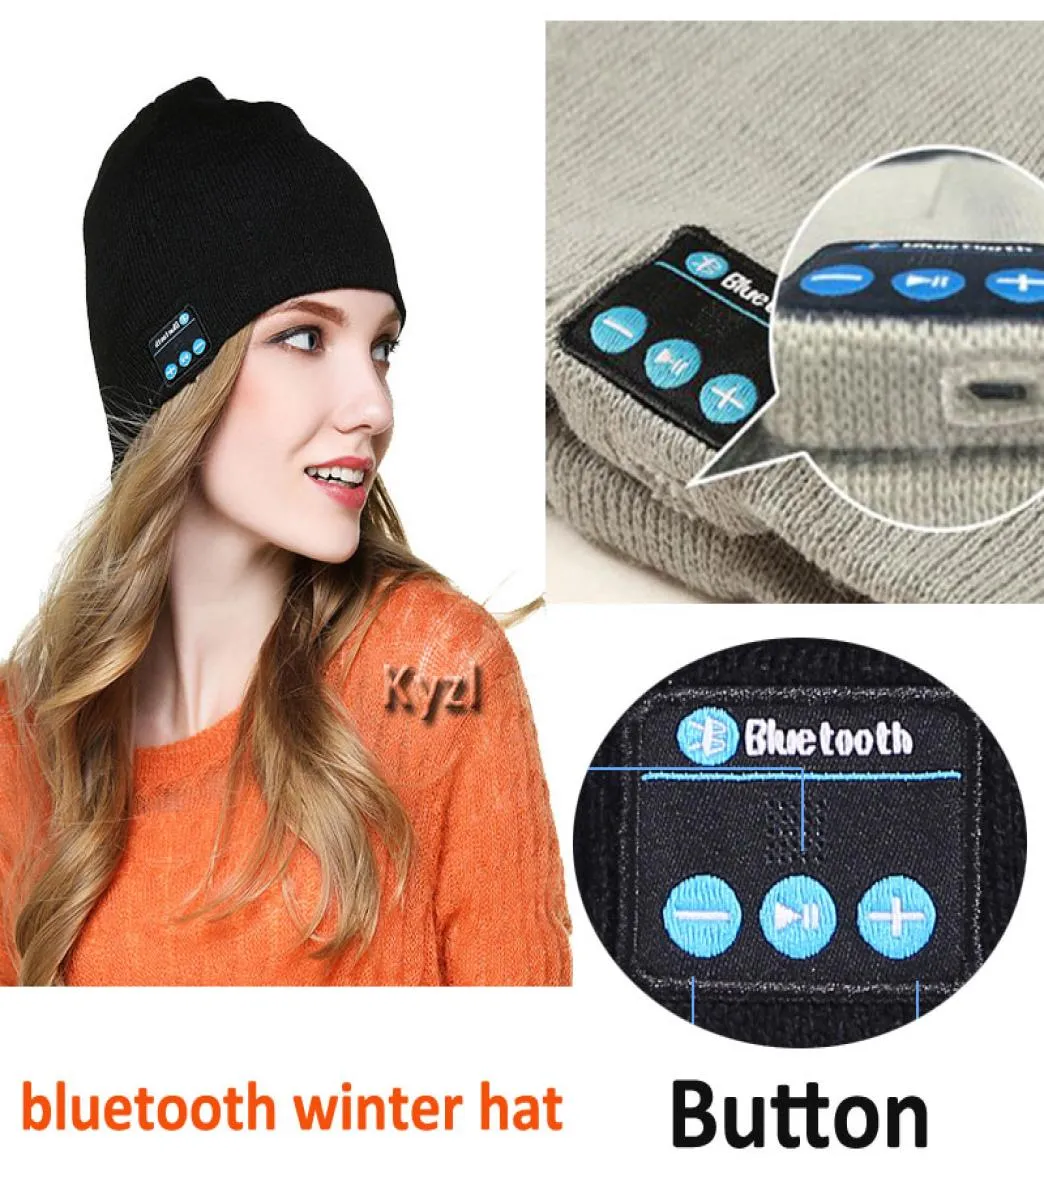 HD Bluetooth Winter Hat Stereo Bluetooth 42 Wireless Smart Beanie Headset Musical Musical Musical Entephone Capeer CaperPhone Cap 1809736566